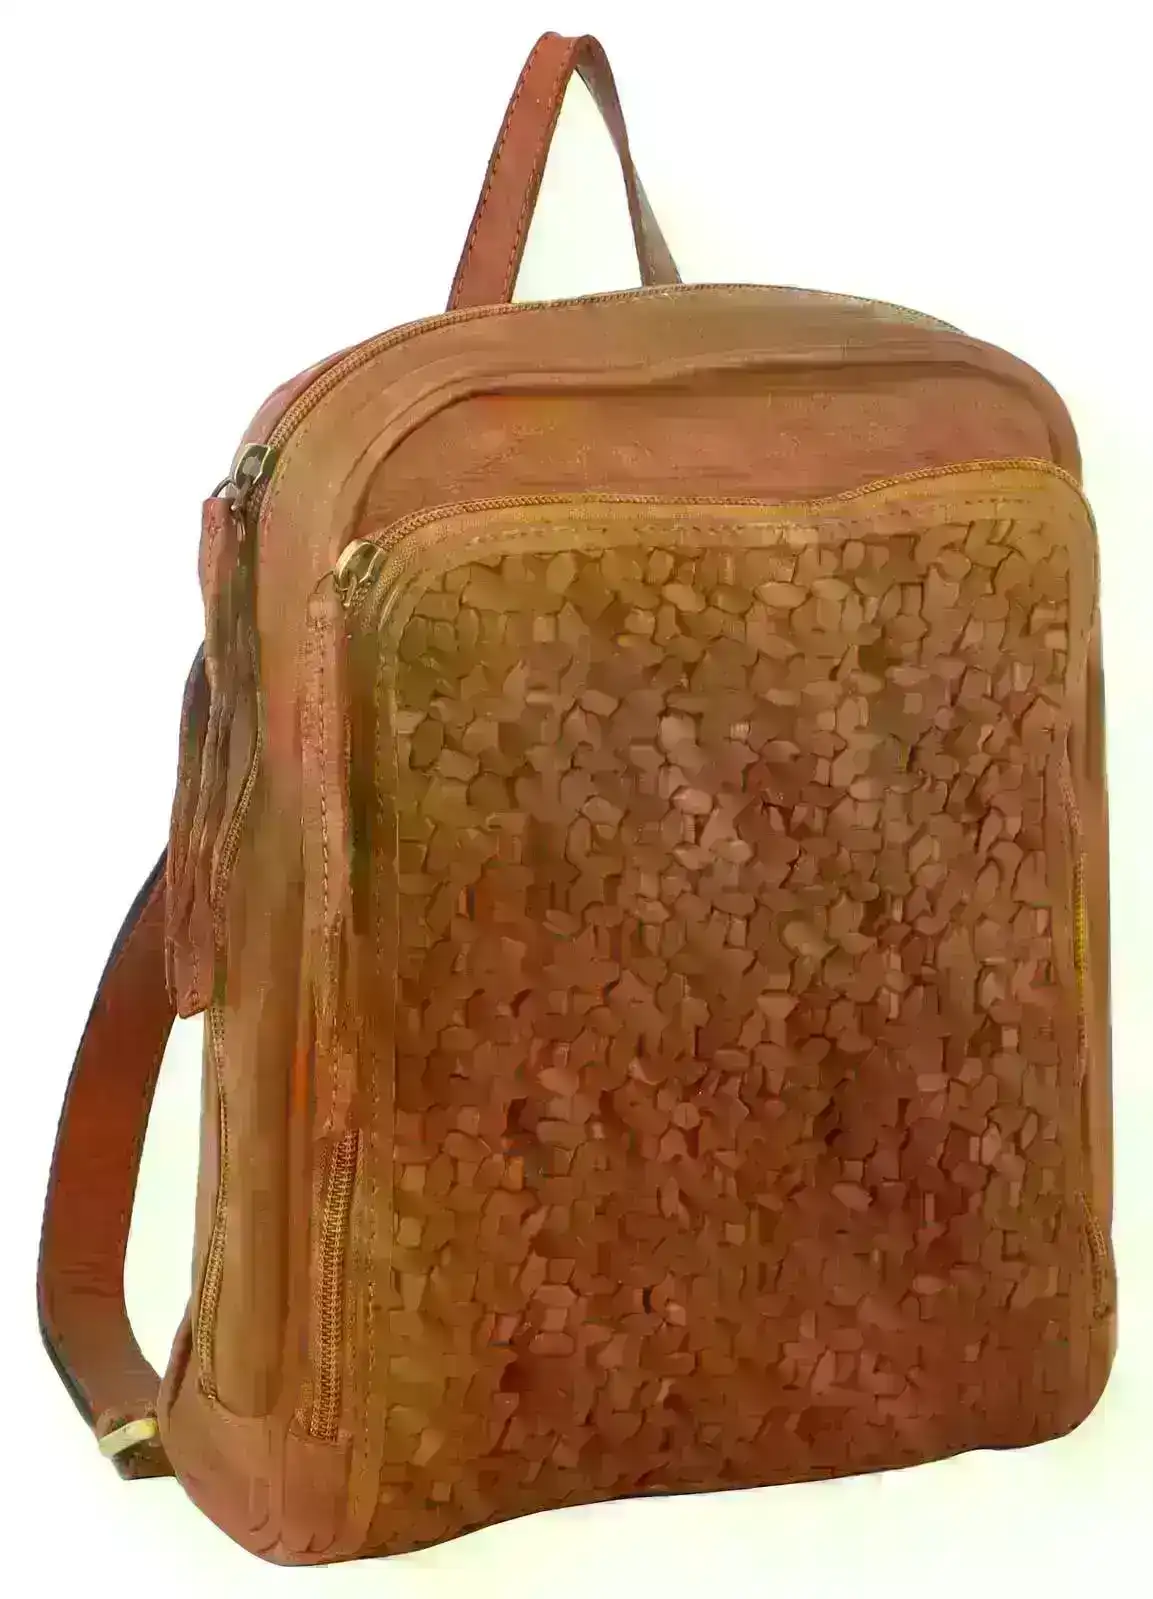 Pierre Cardin Woven Leather Ladies Backpack Bag Travel - Cognac